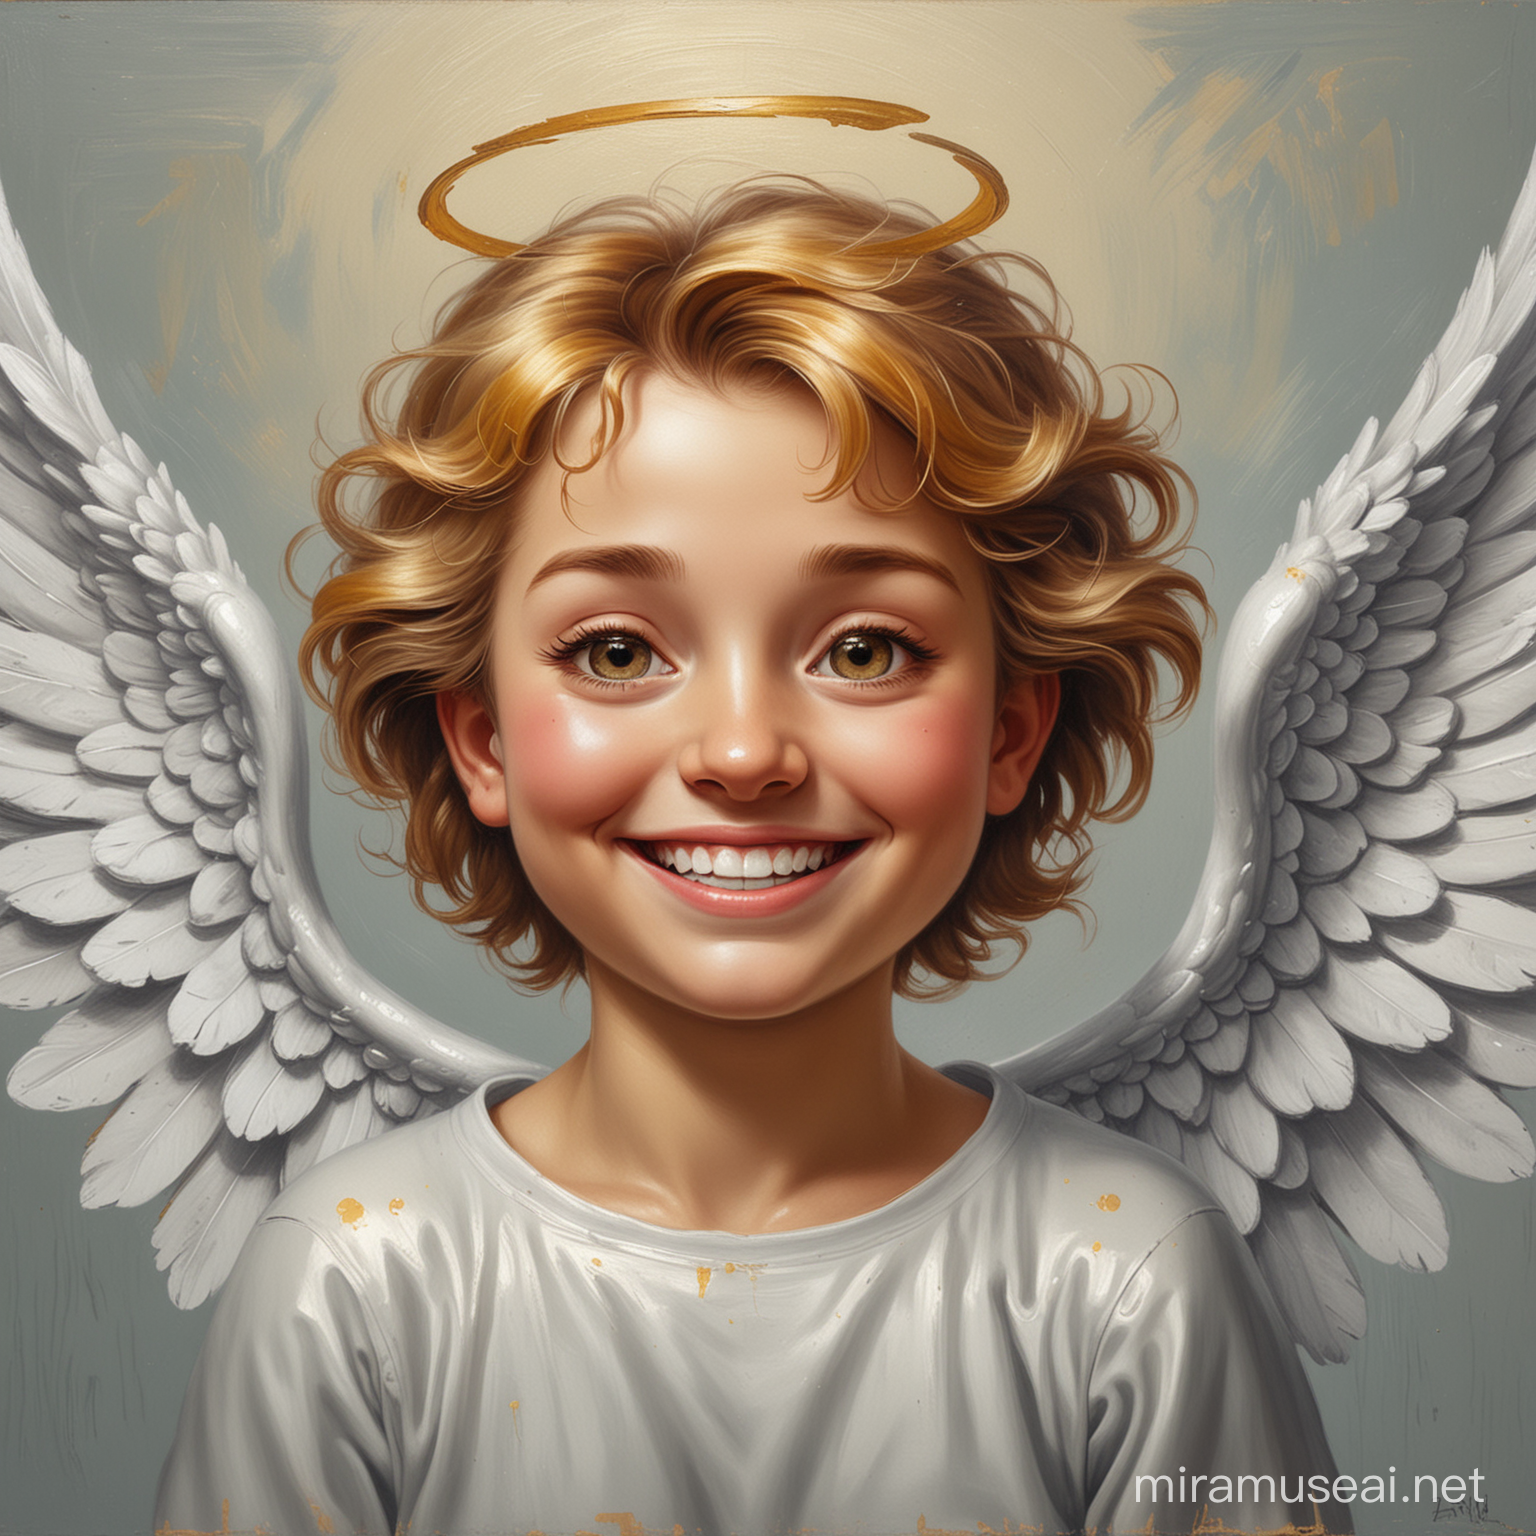 Metallic Smiling Emoji Head on Angel RenaissanceInspired Oil Painting